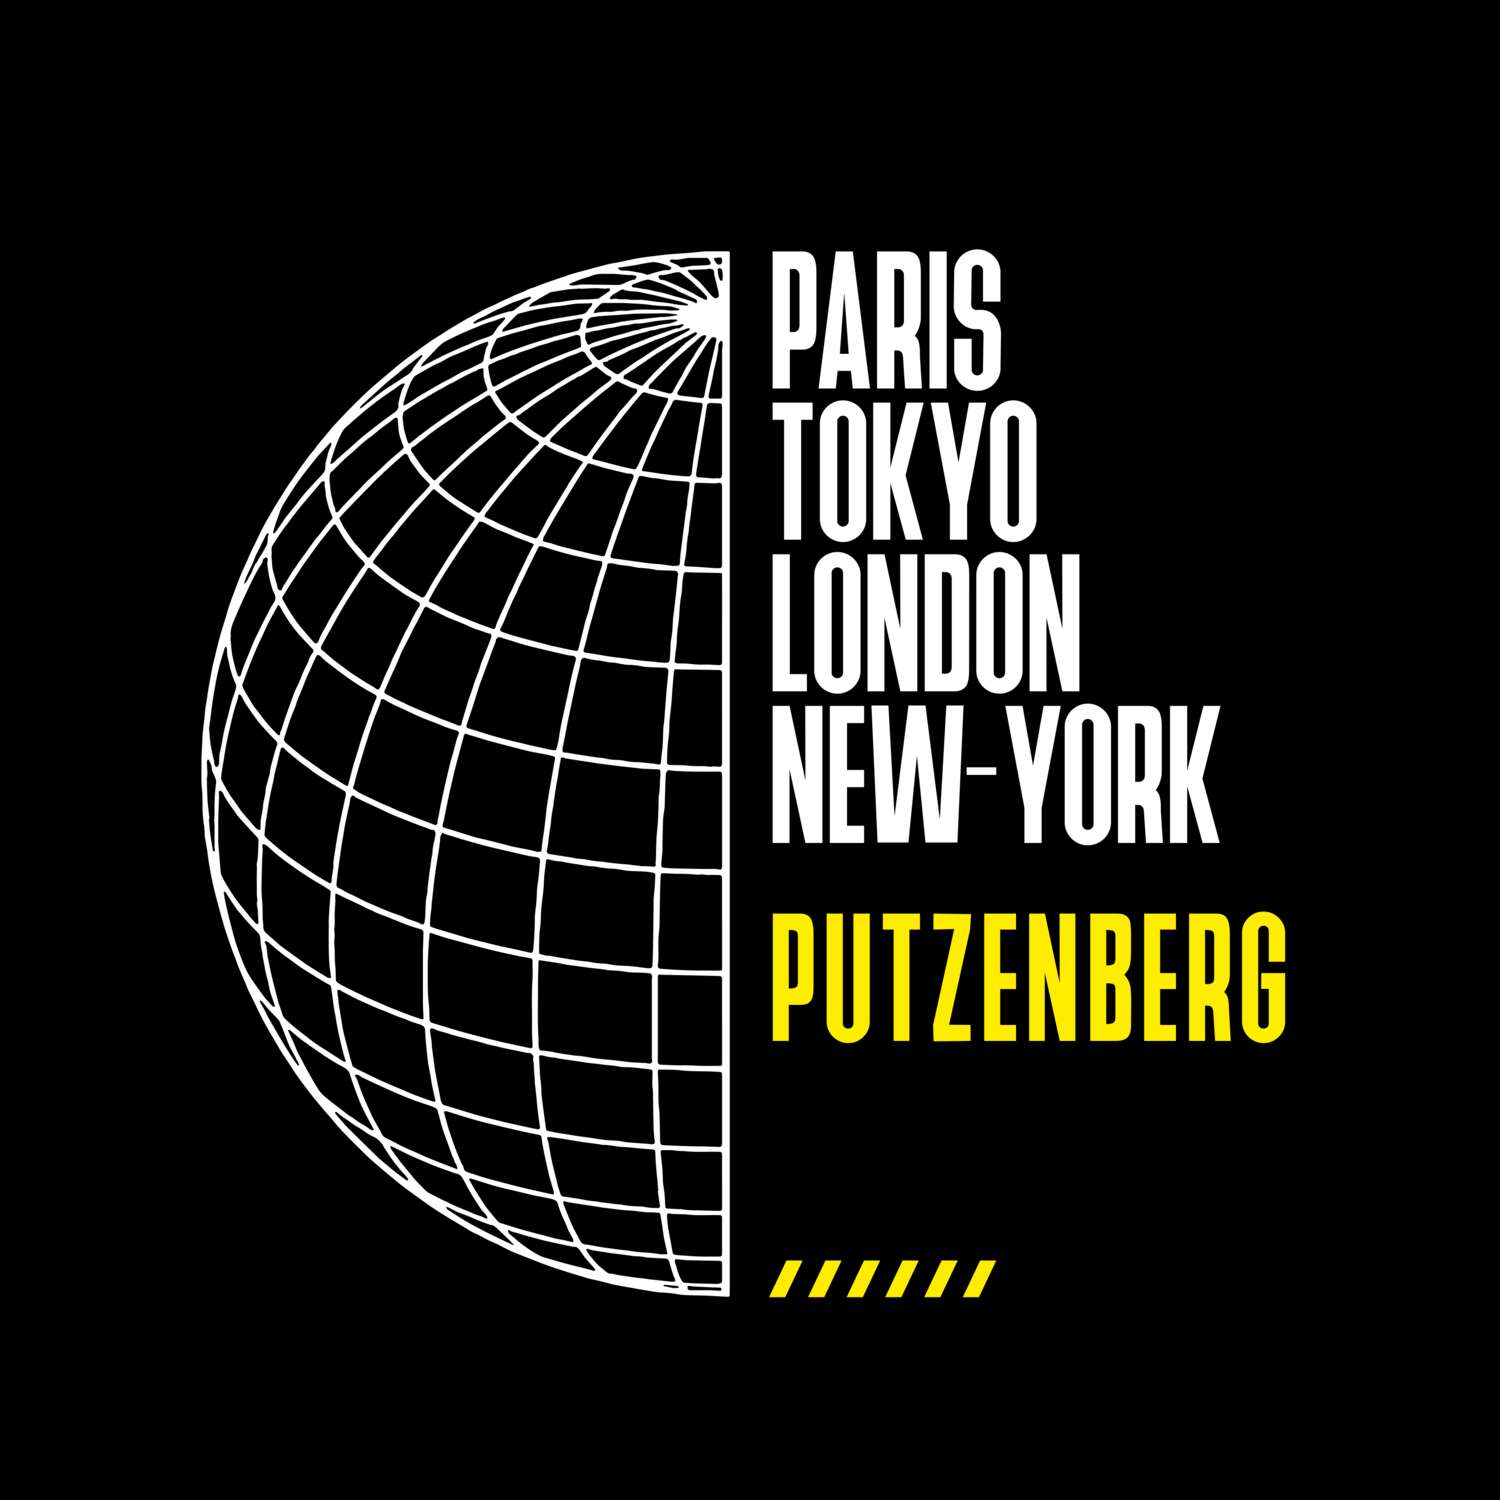 Putzenberg T-Shirt »Paris Tokyo London«